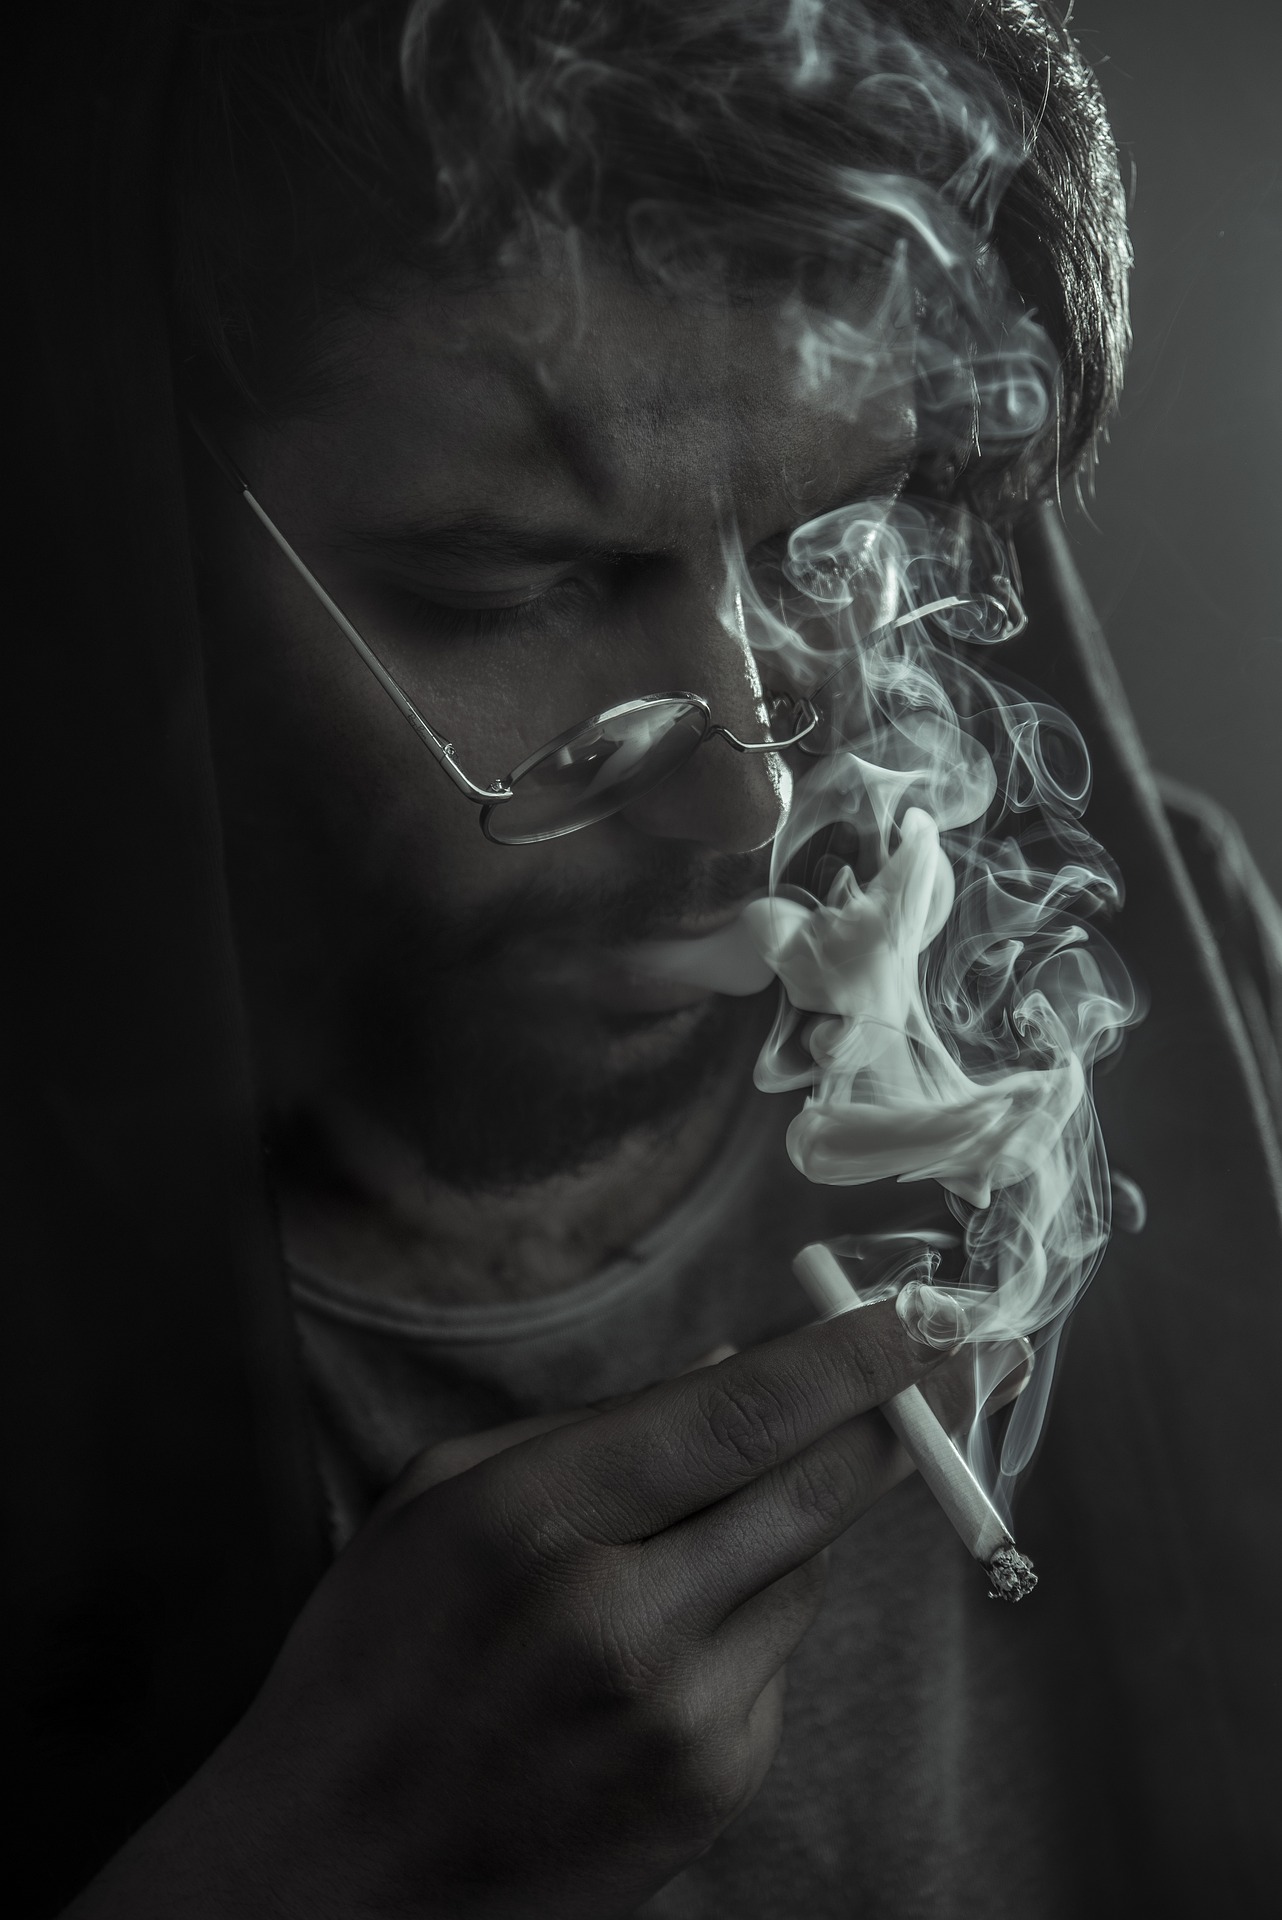 Smoke glass. Курящий человек. Курильщик арт. Человек с сигаретой Эстетика. Курящий человек арт.